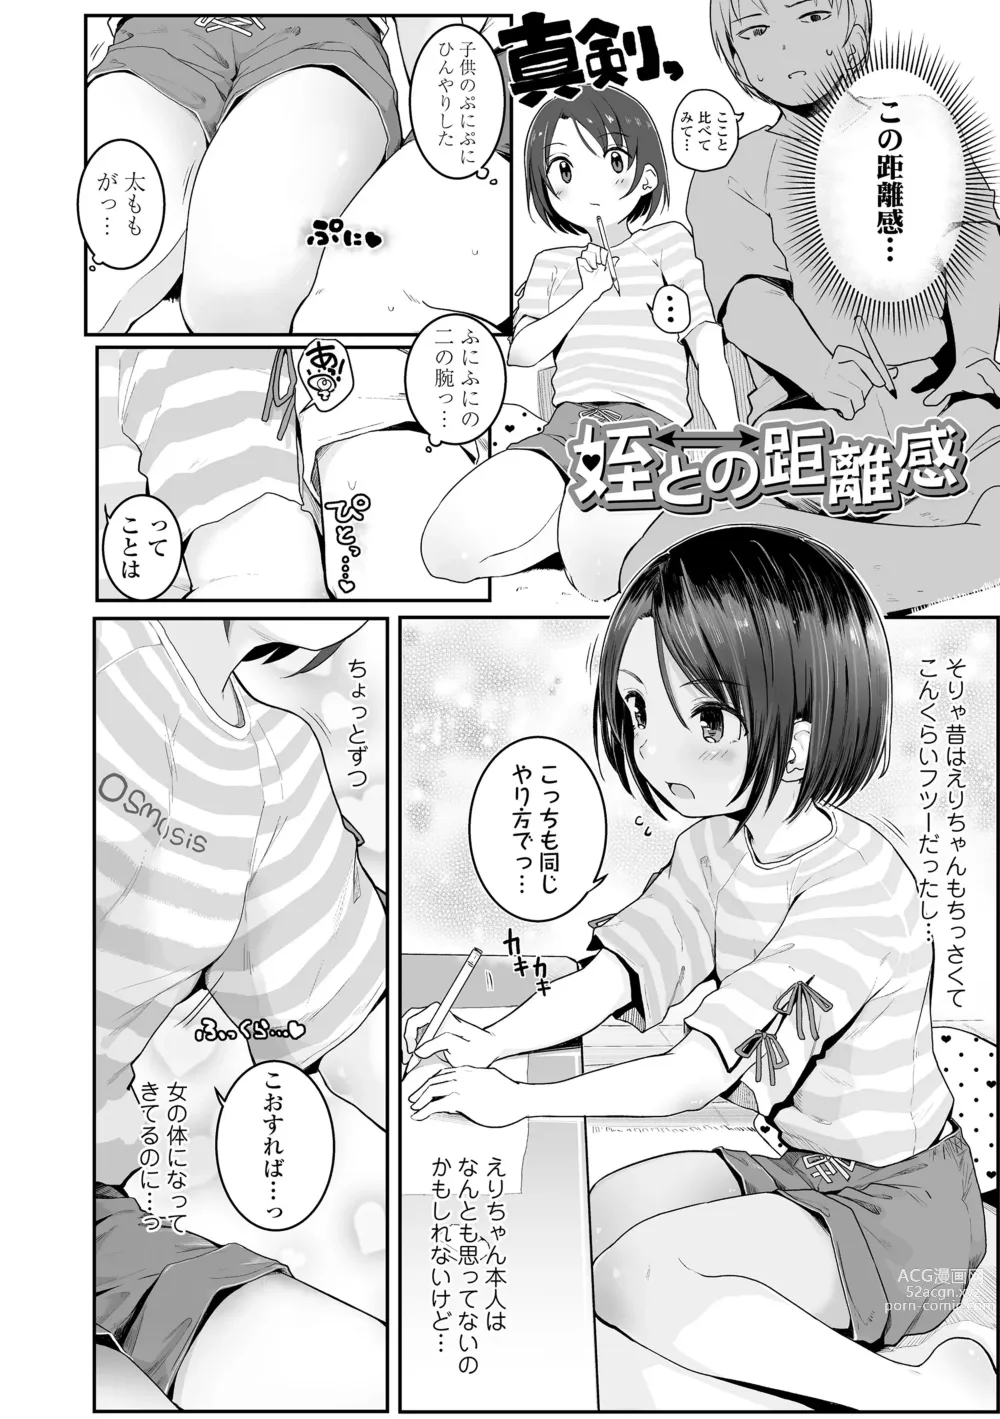 Page 6 of manga Chiisai Houga H Desho